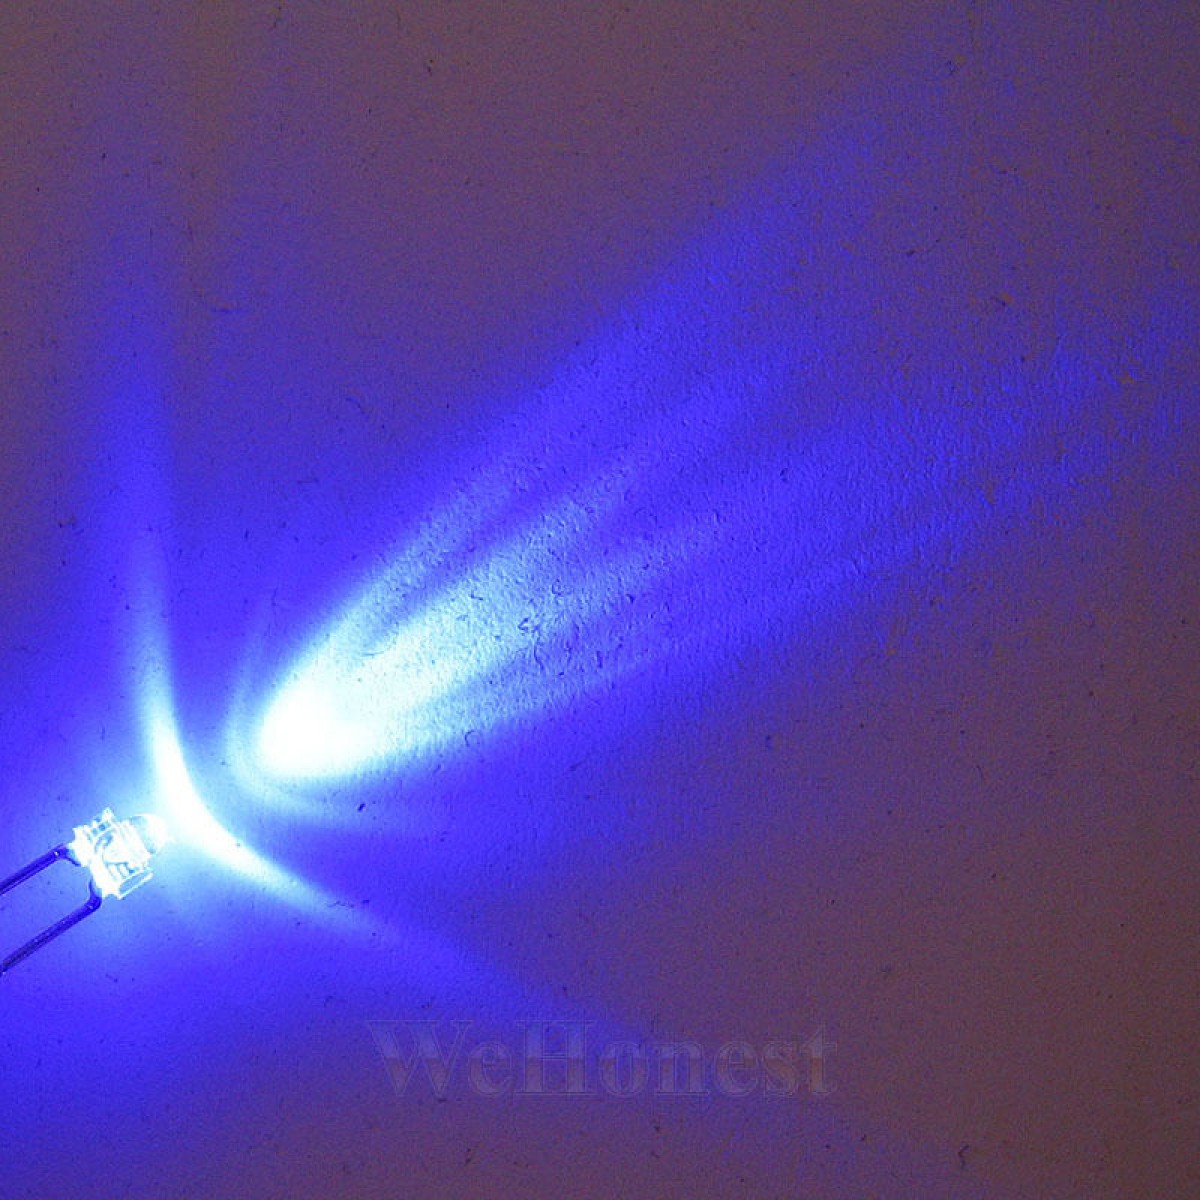      20  x  Light  Emitting  Diode  LEDs  Dia  1.8mm  Blue  Light  (WeHonest)